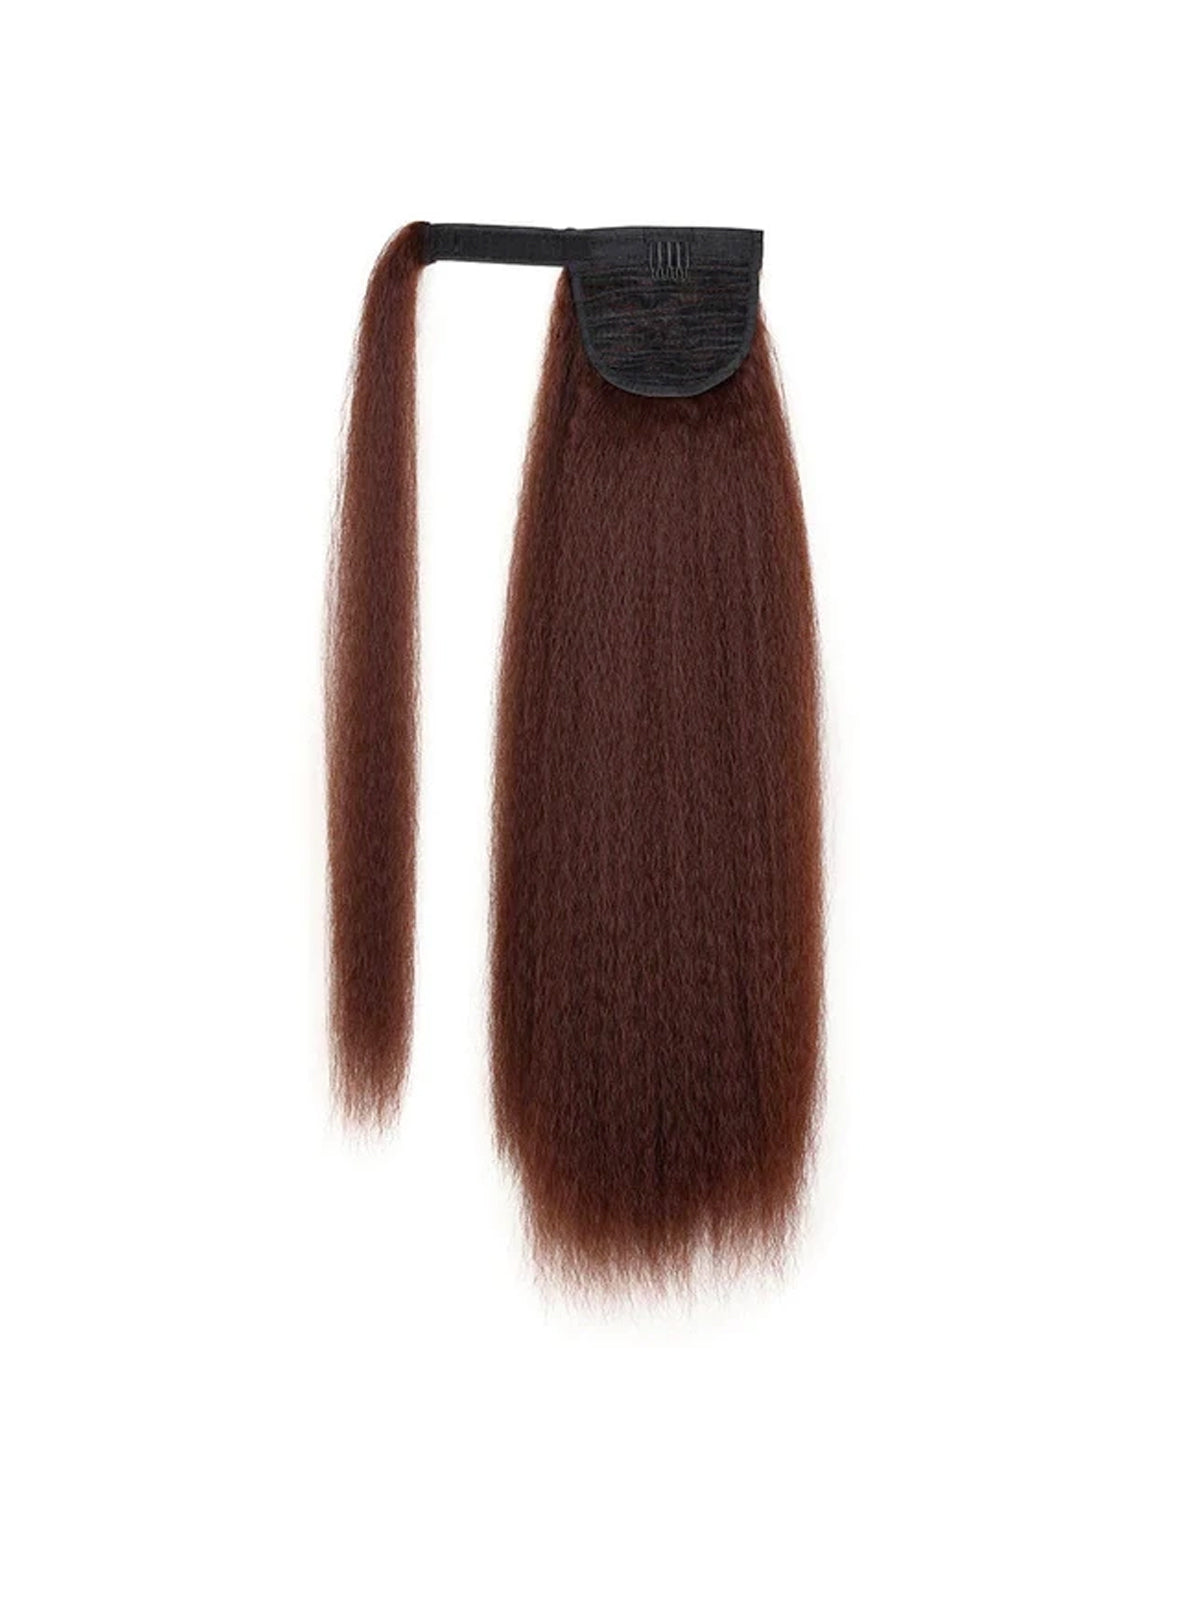 Kids Halloween Wigs | Wavy Ponytail Hair Extension - Mia Belle Girls